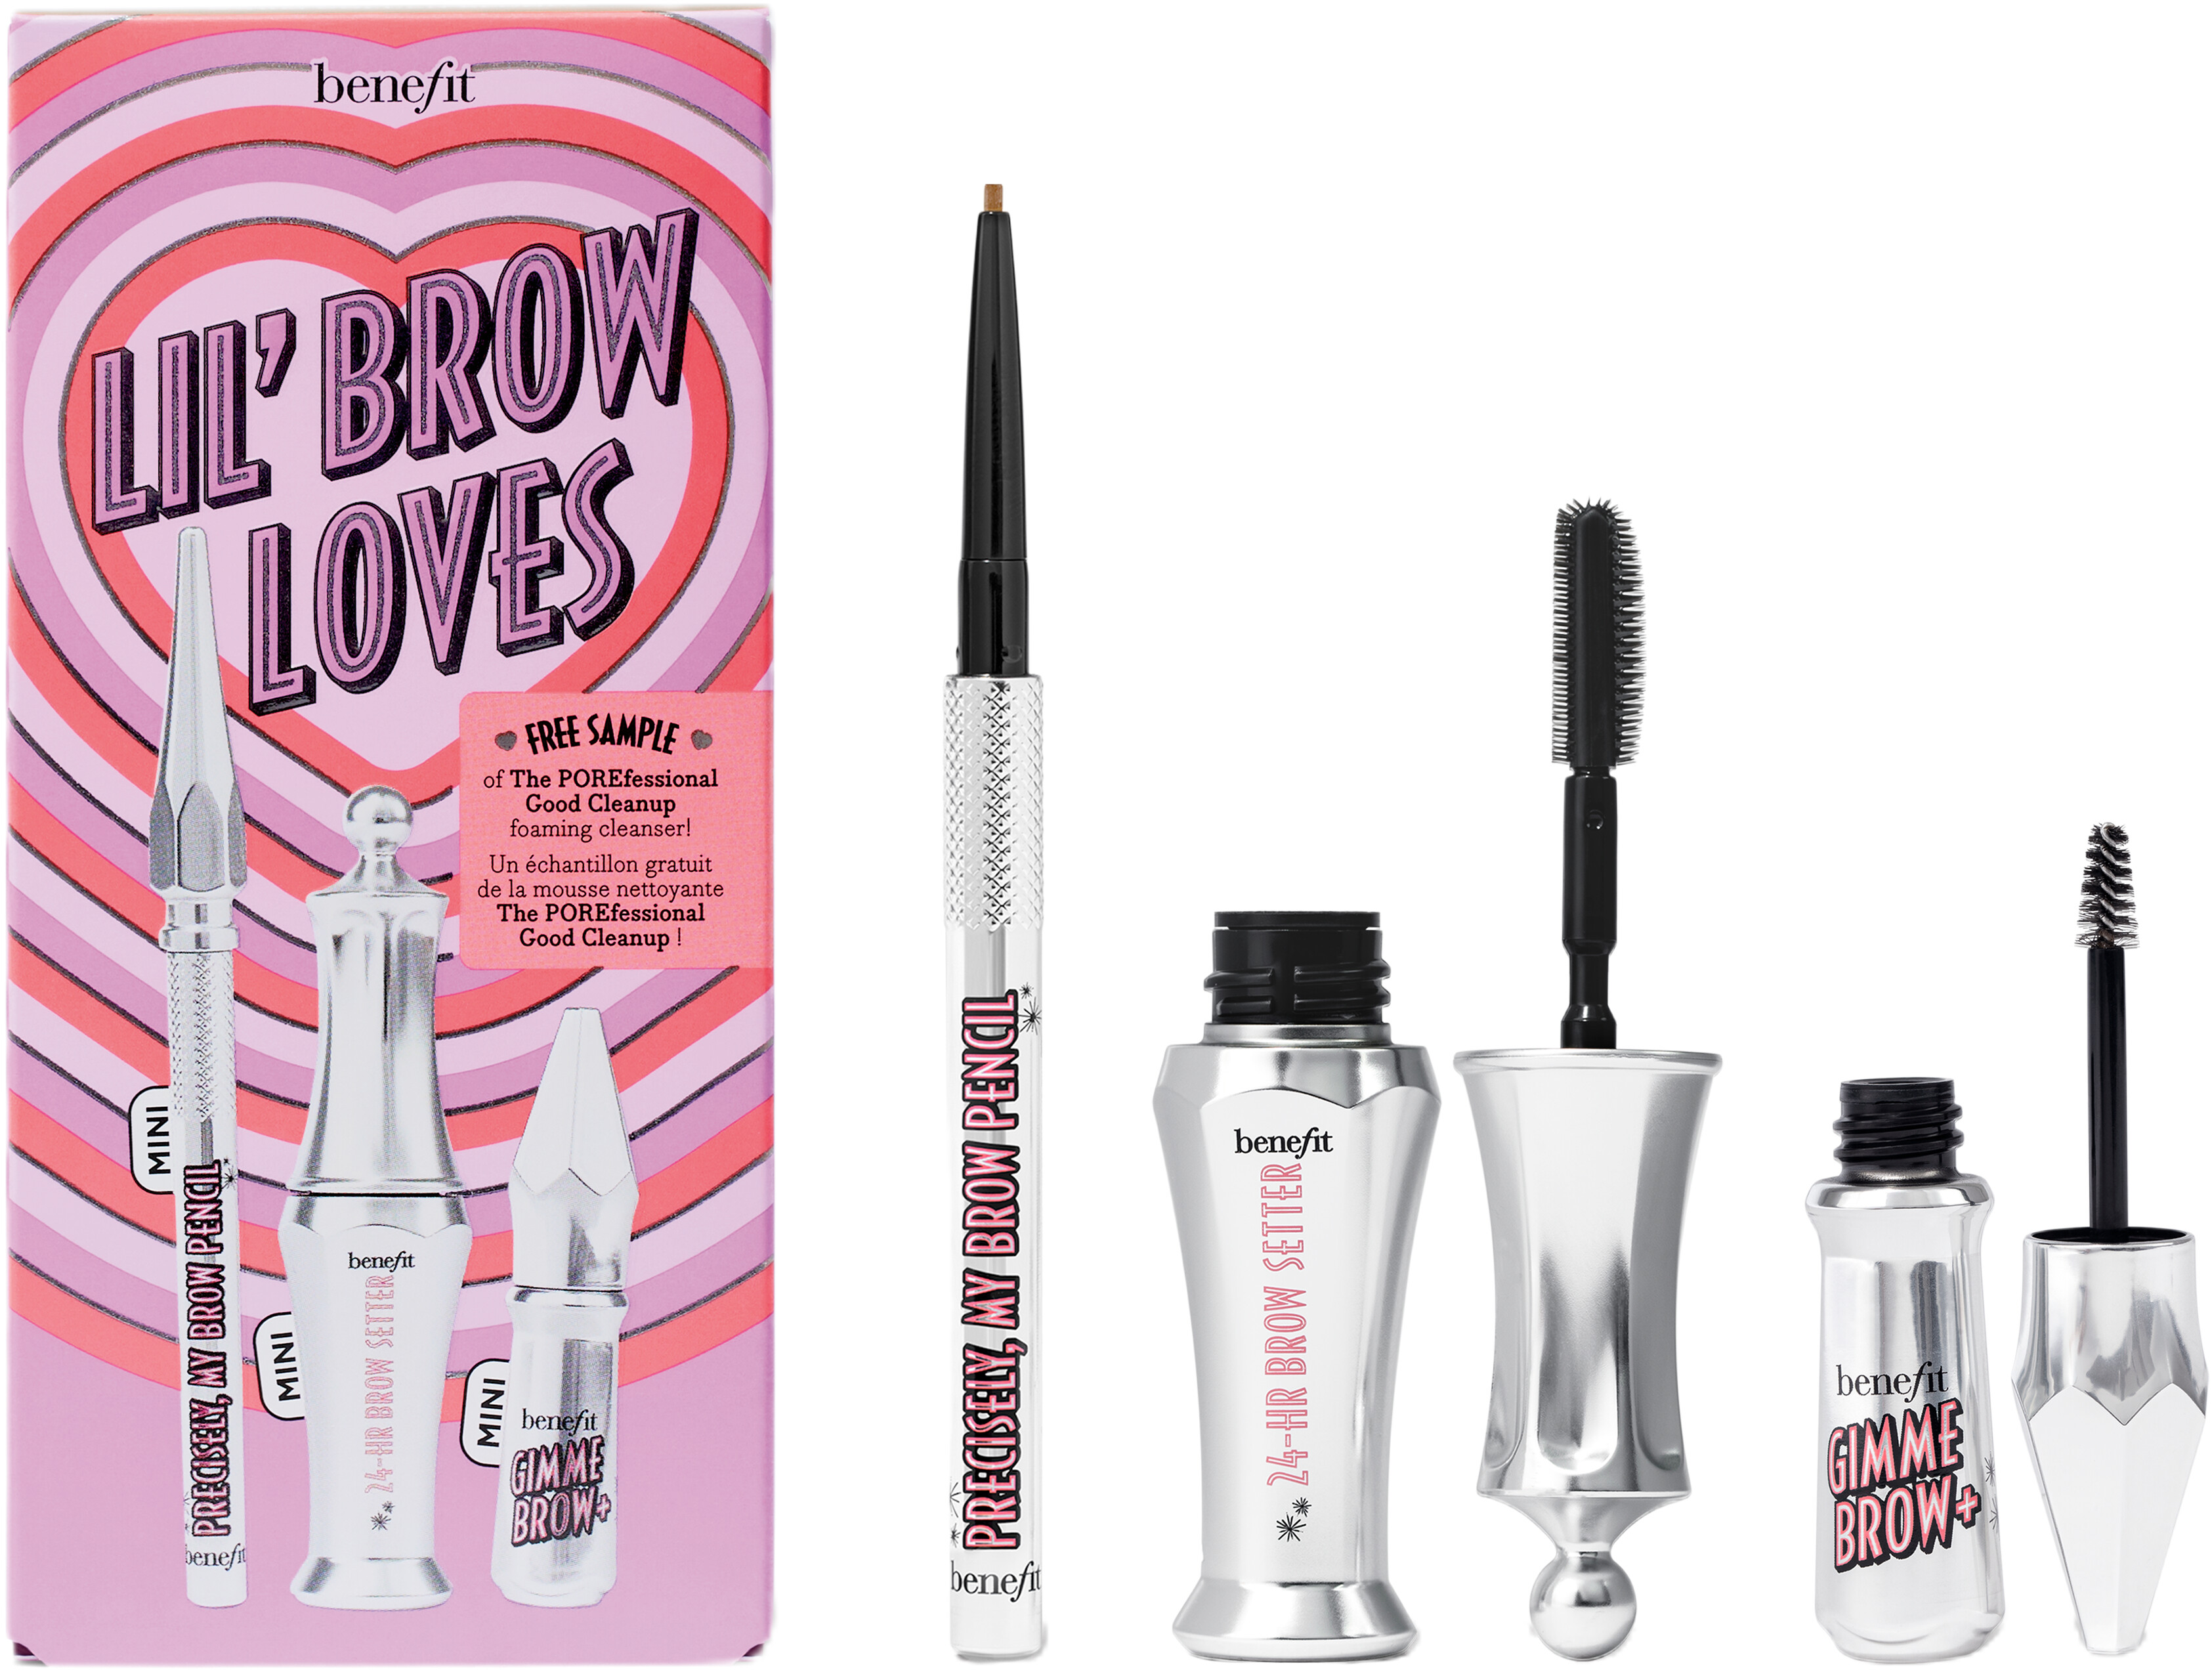 Benefit Lil' Brow Loves Mini Brow Gift Set 2 - Warm Golden Blonde